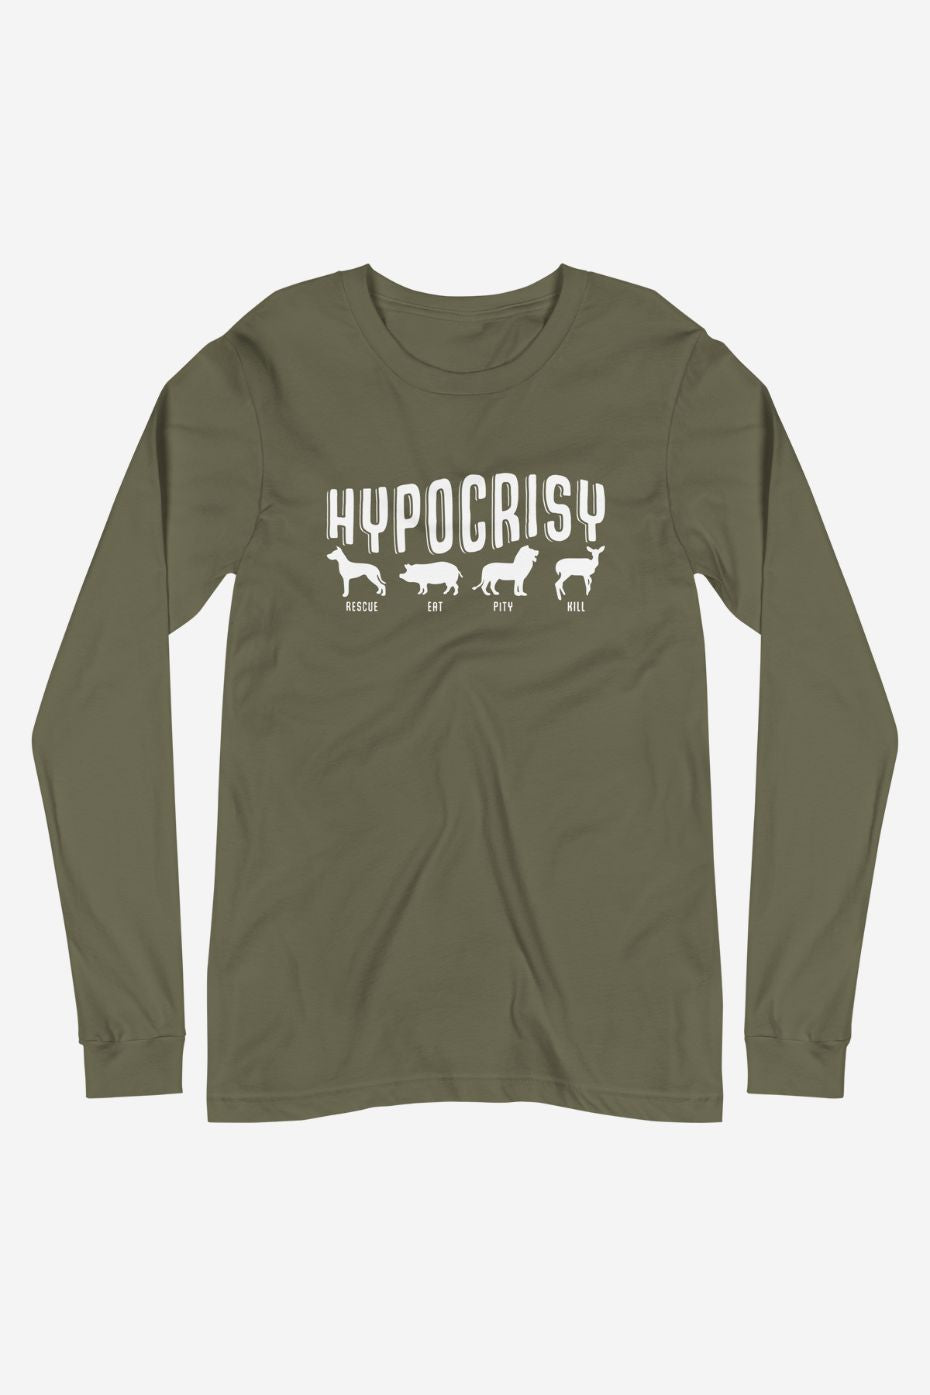 Hypocrisy - Unisex Long Sleeve Tee